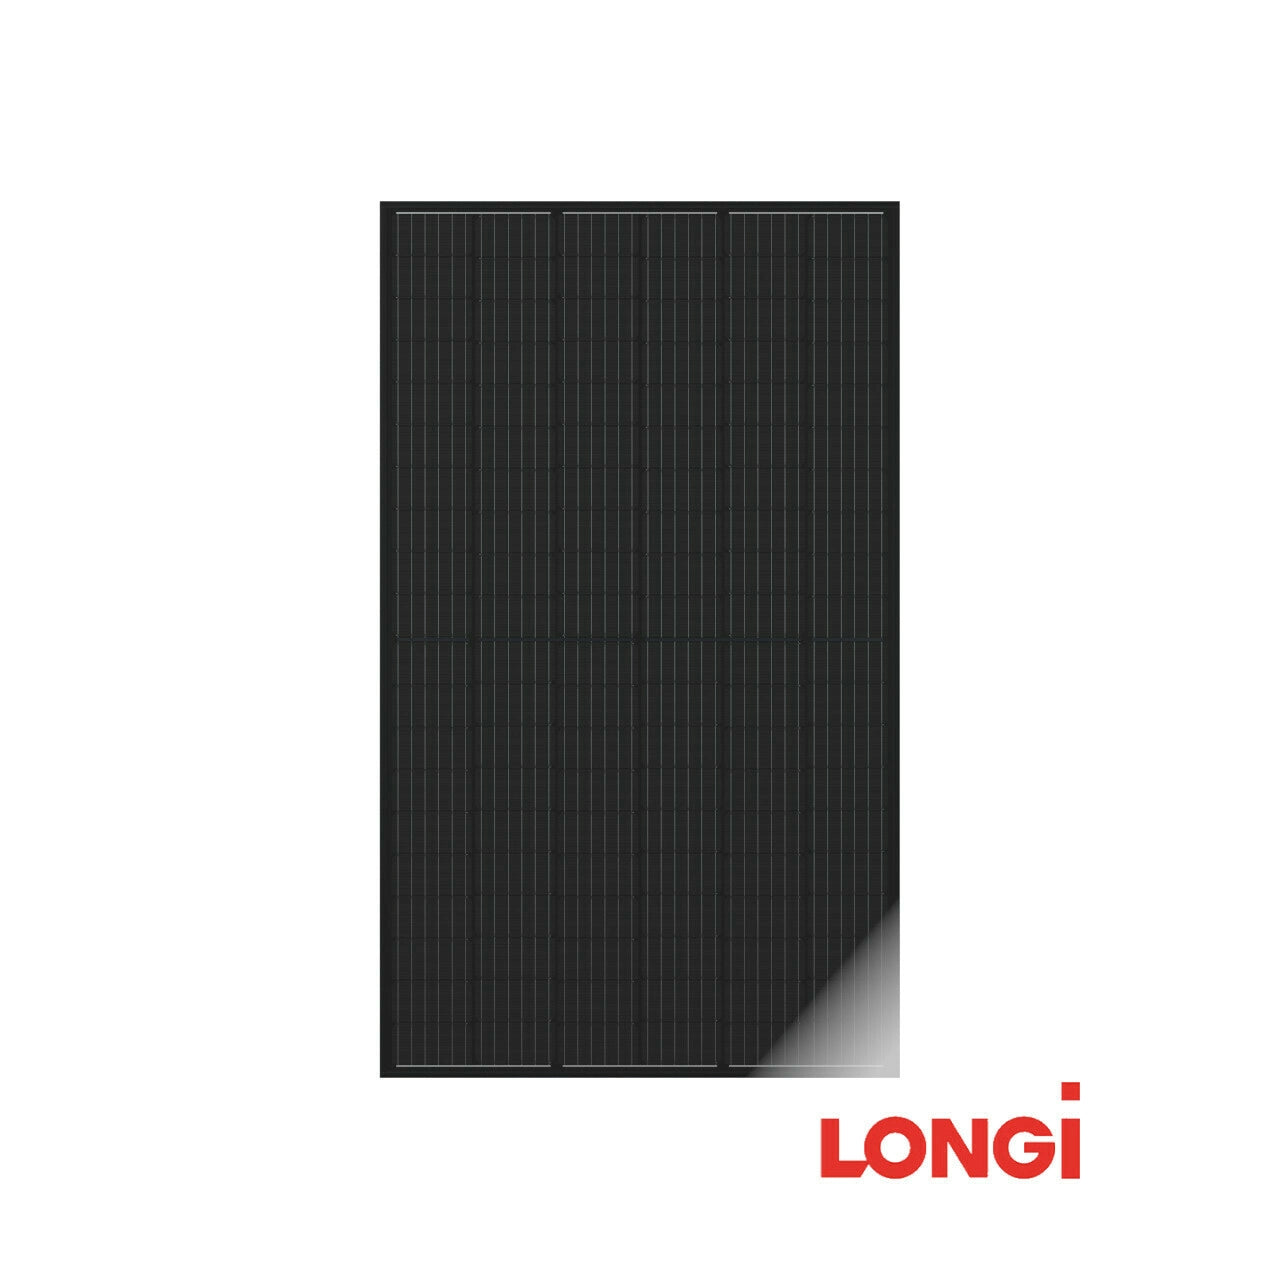 Longi - LR4-60HPB-360M - Mono - Black  | Currently On Backorder